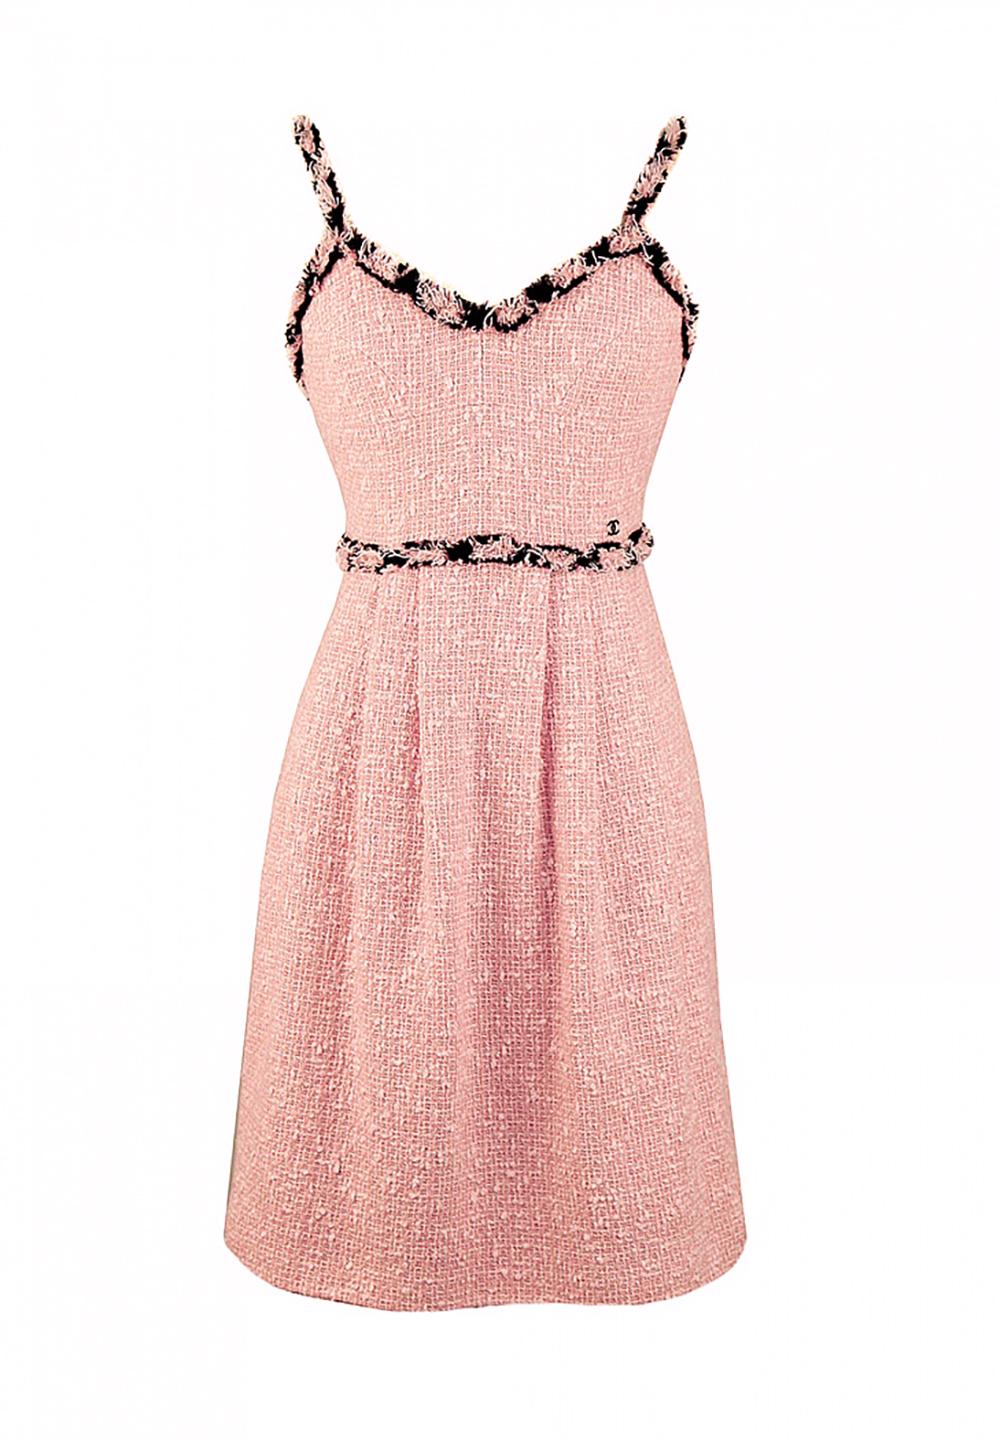 Chanel Eva Longoria Style Famous Pastel Pink Tweed Dress For Sale 2